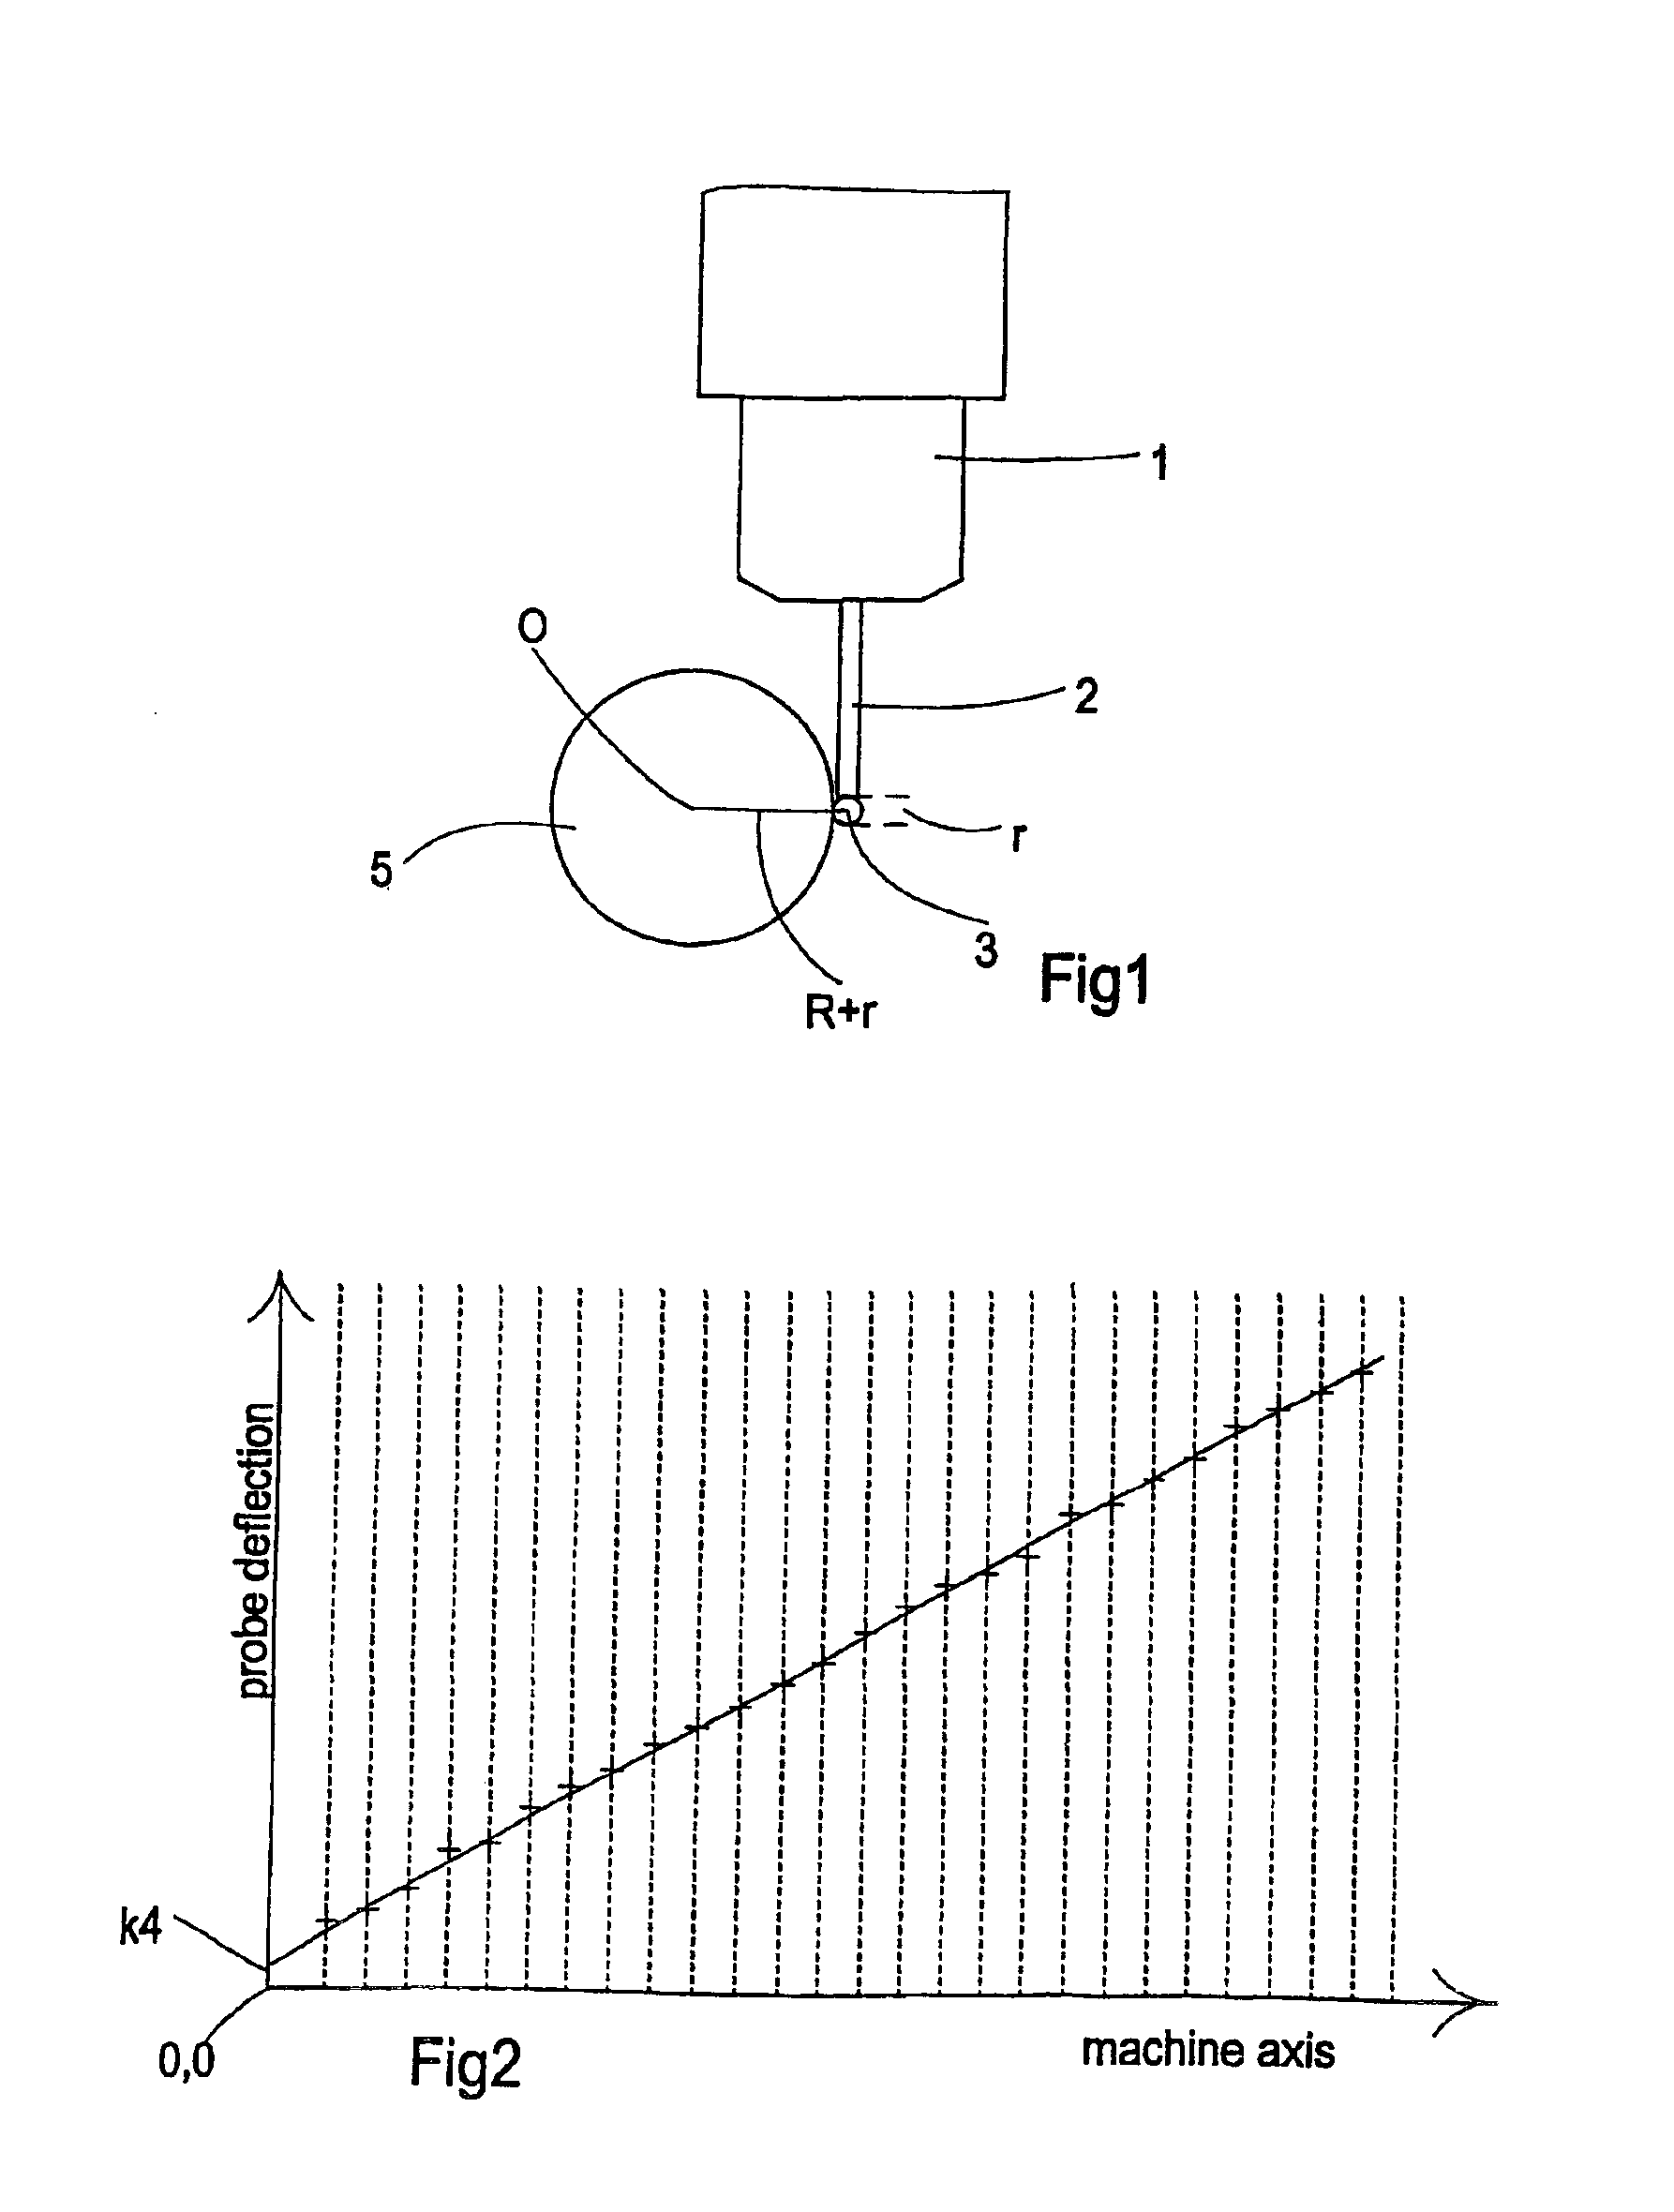 Calibration of an analogue probe